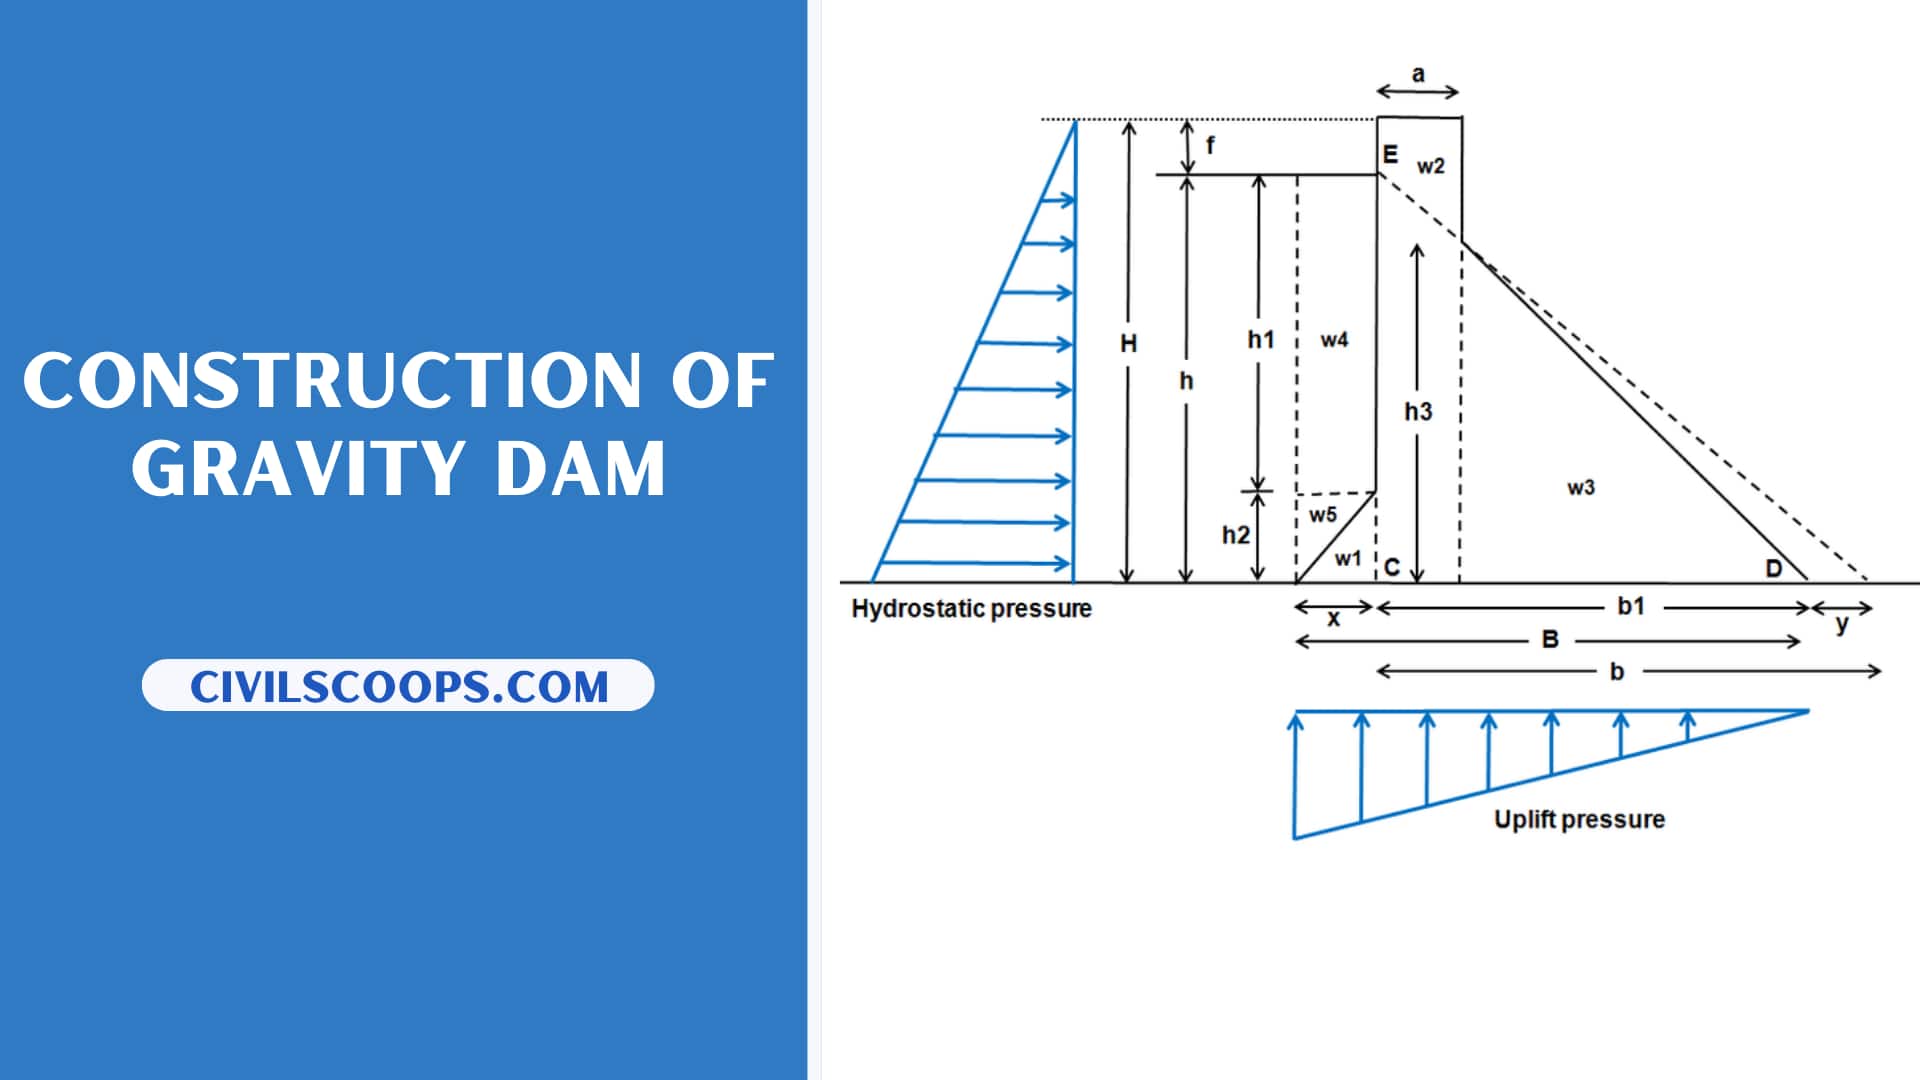 Construction of Gravity Dam